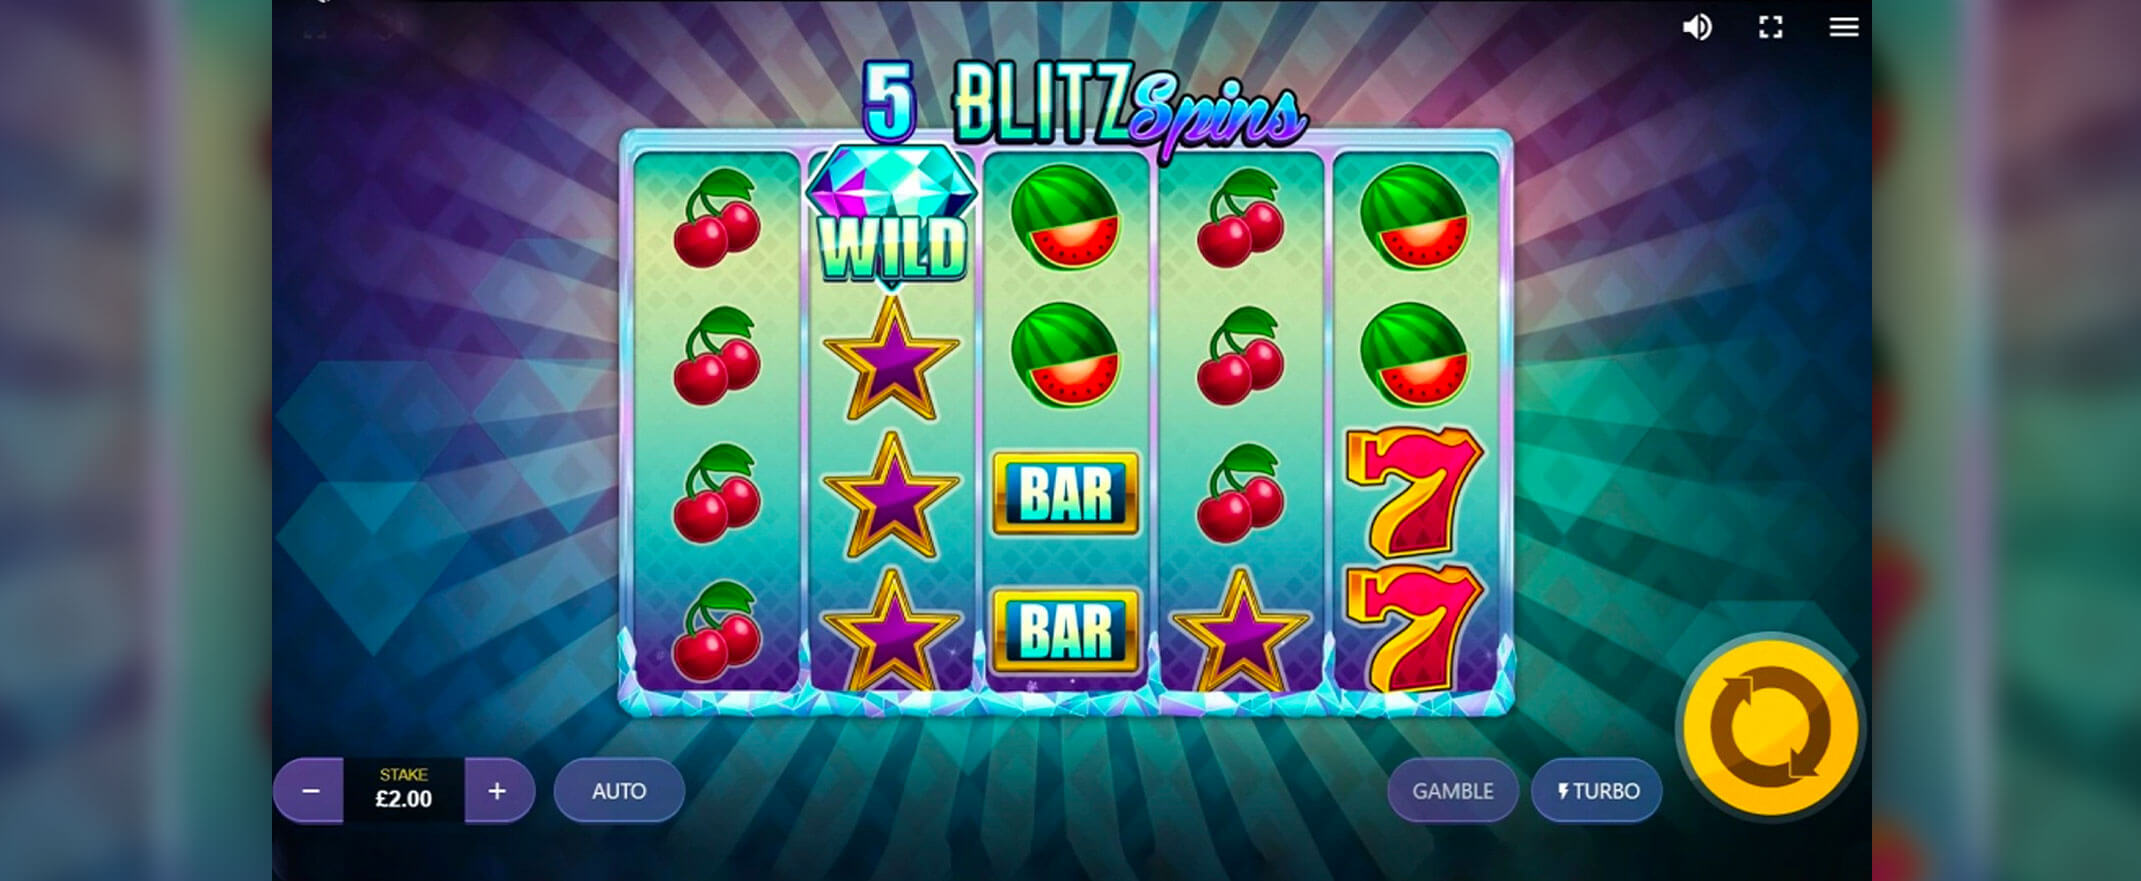 Diamond Blitz Slot Online